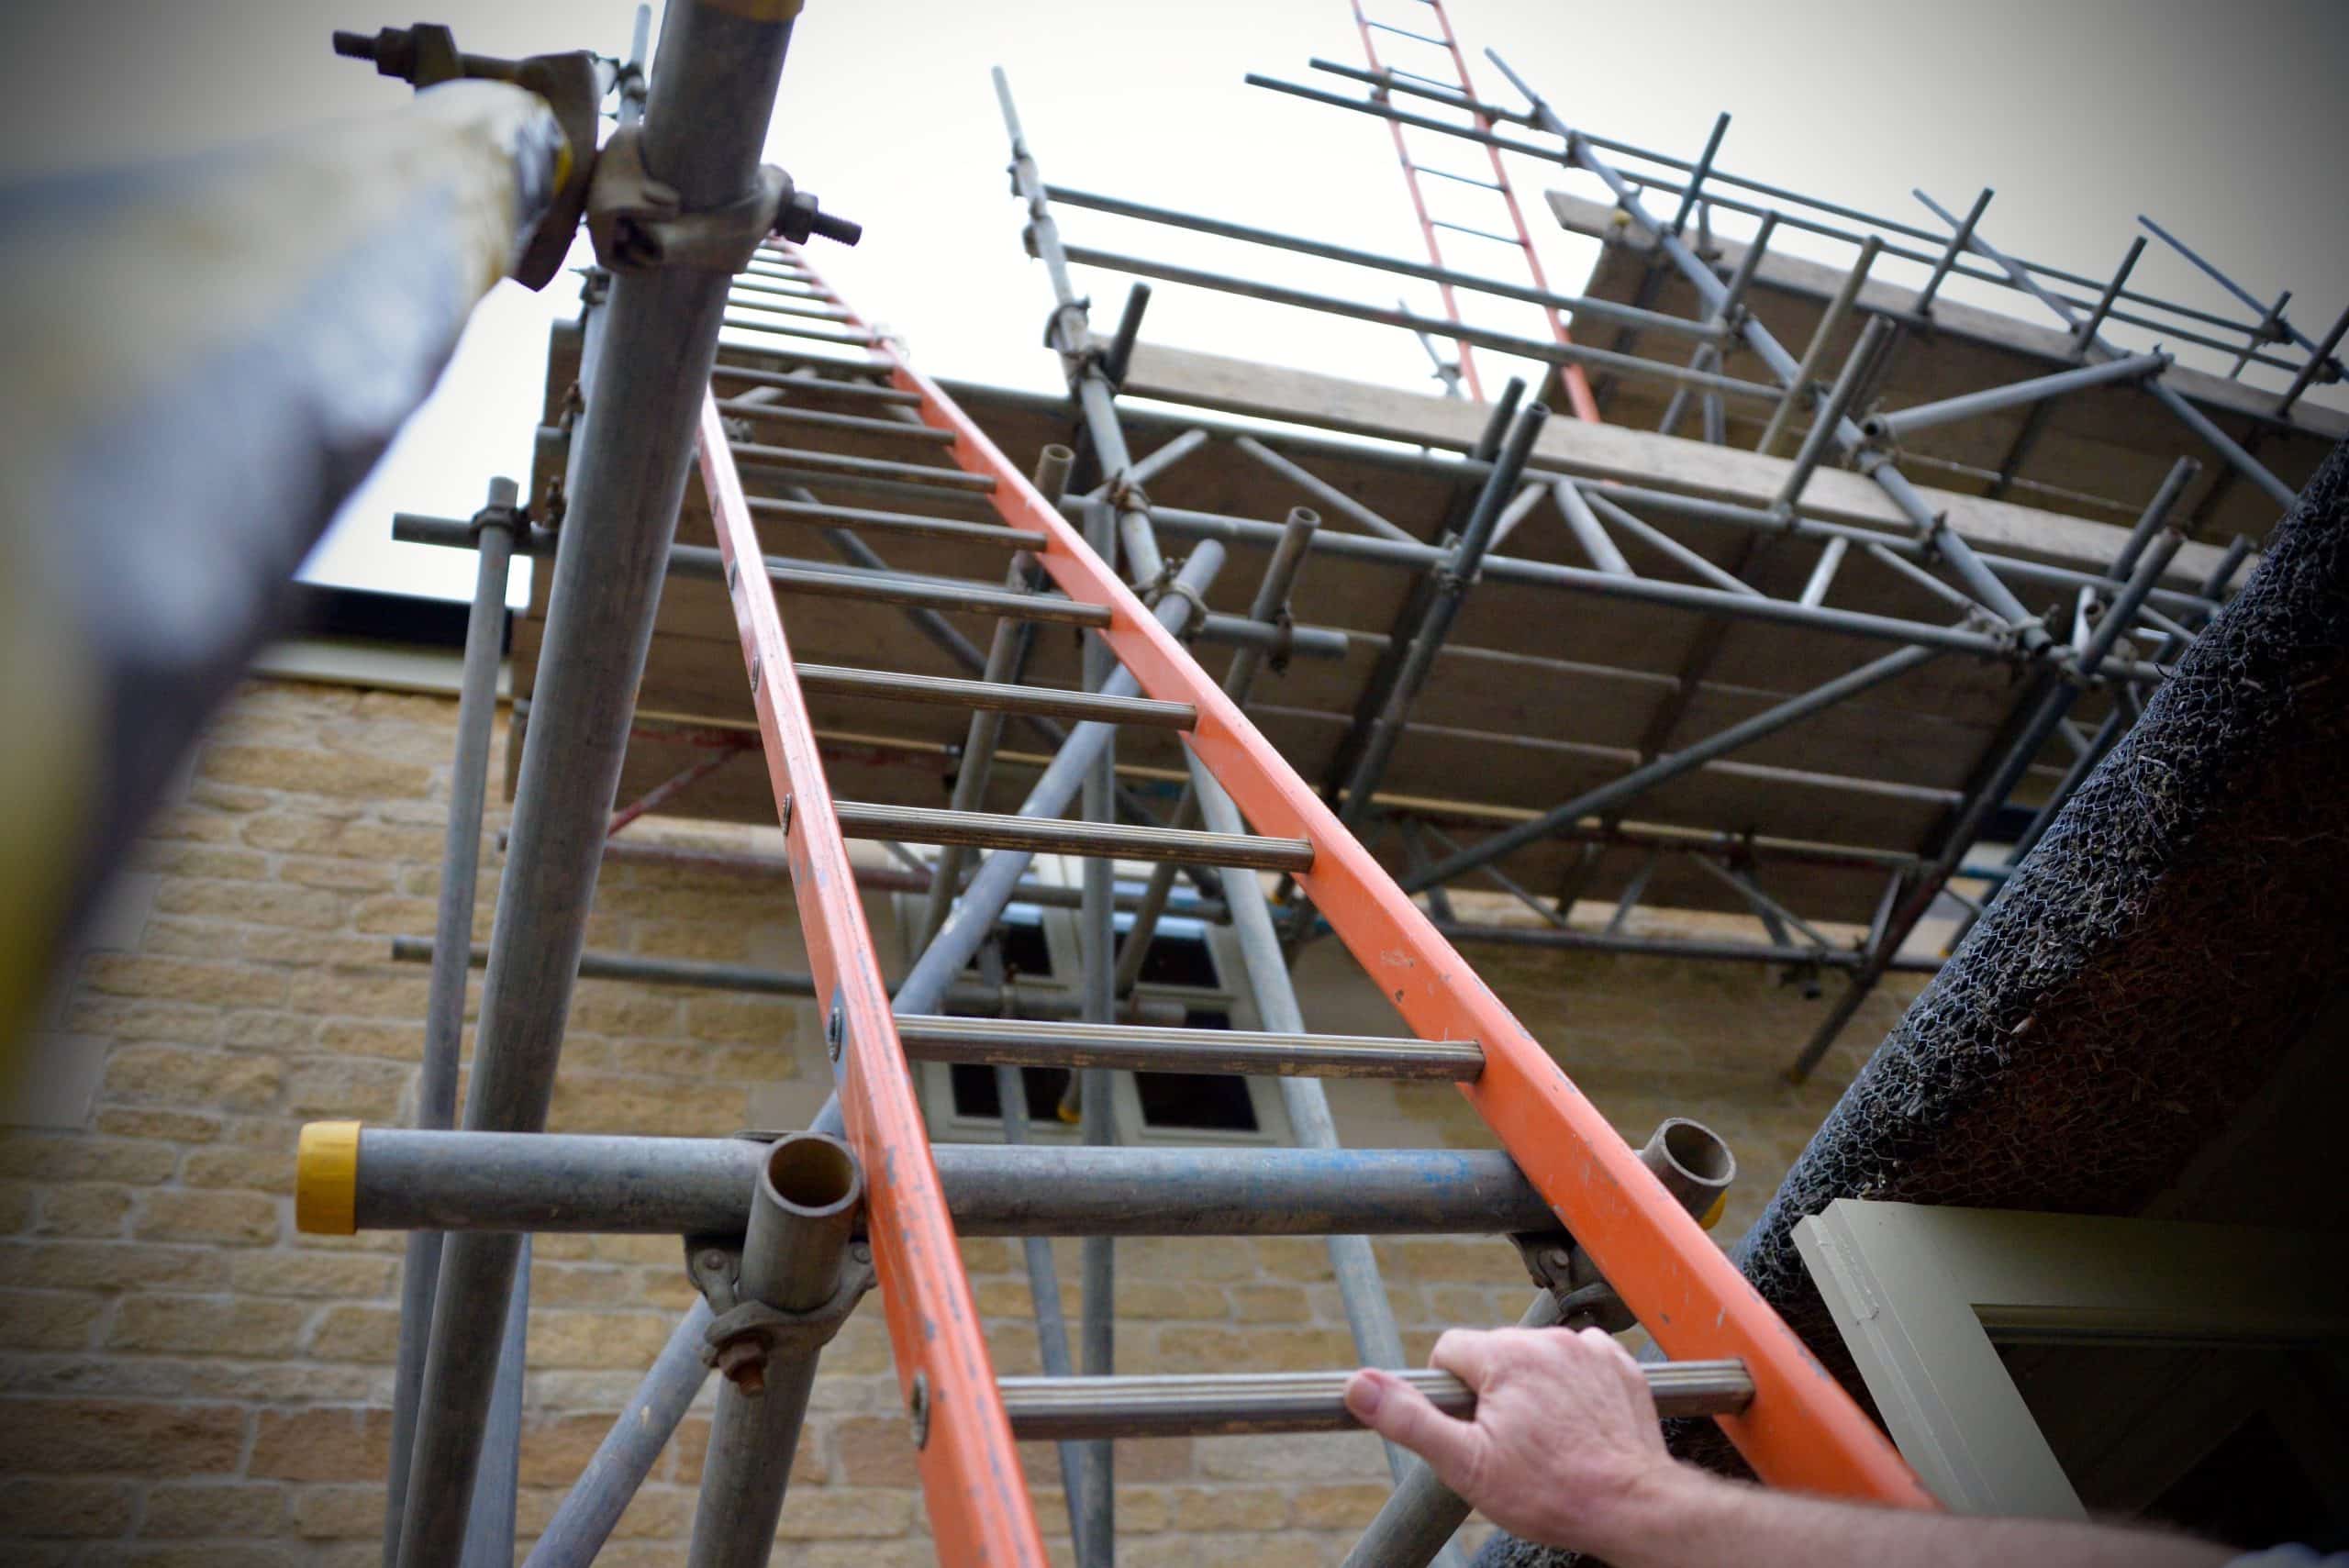 man climbing up a ladder to access scaffolding